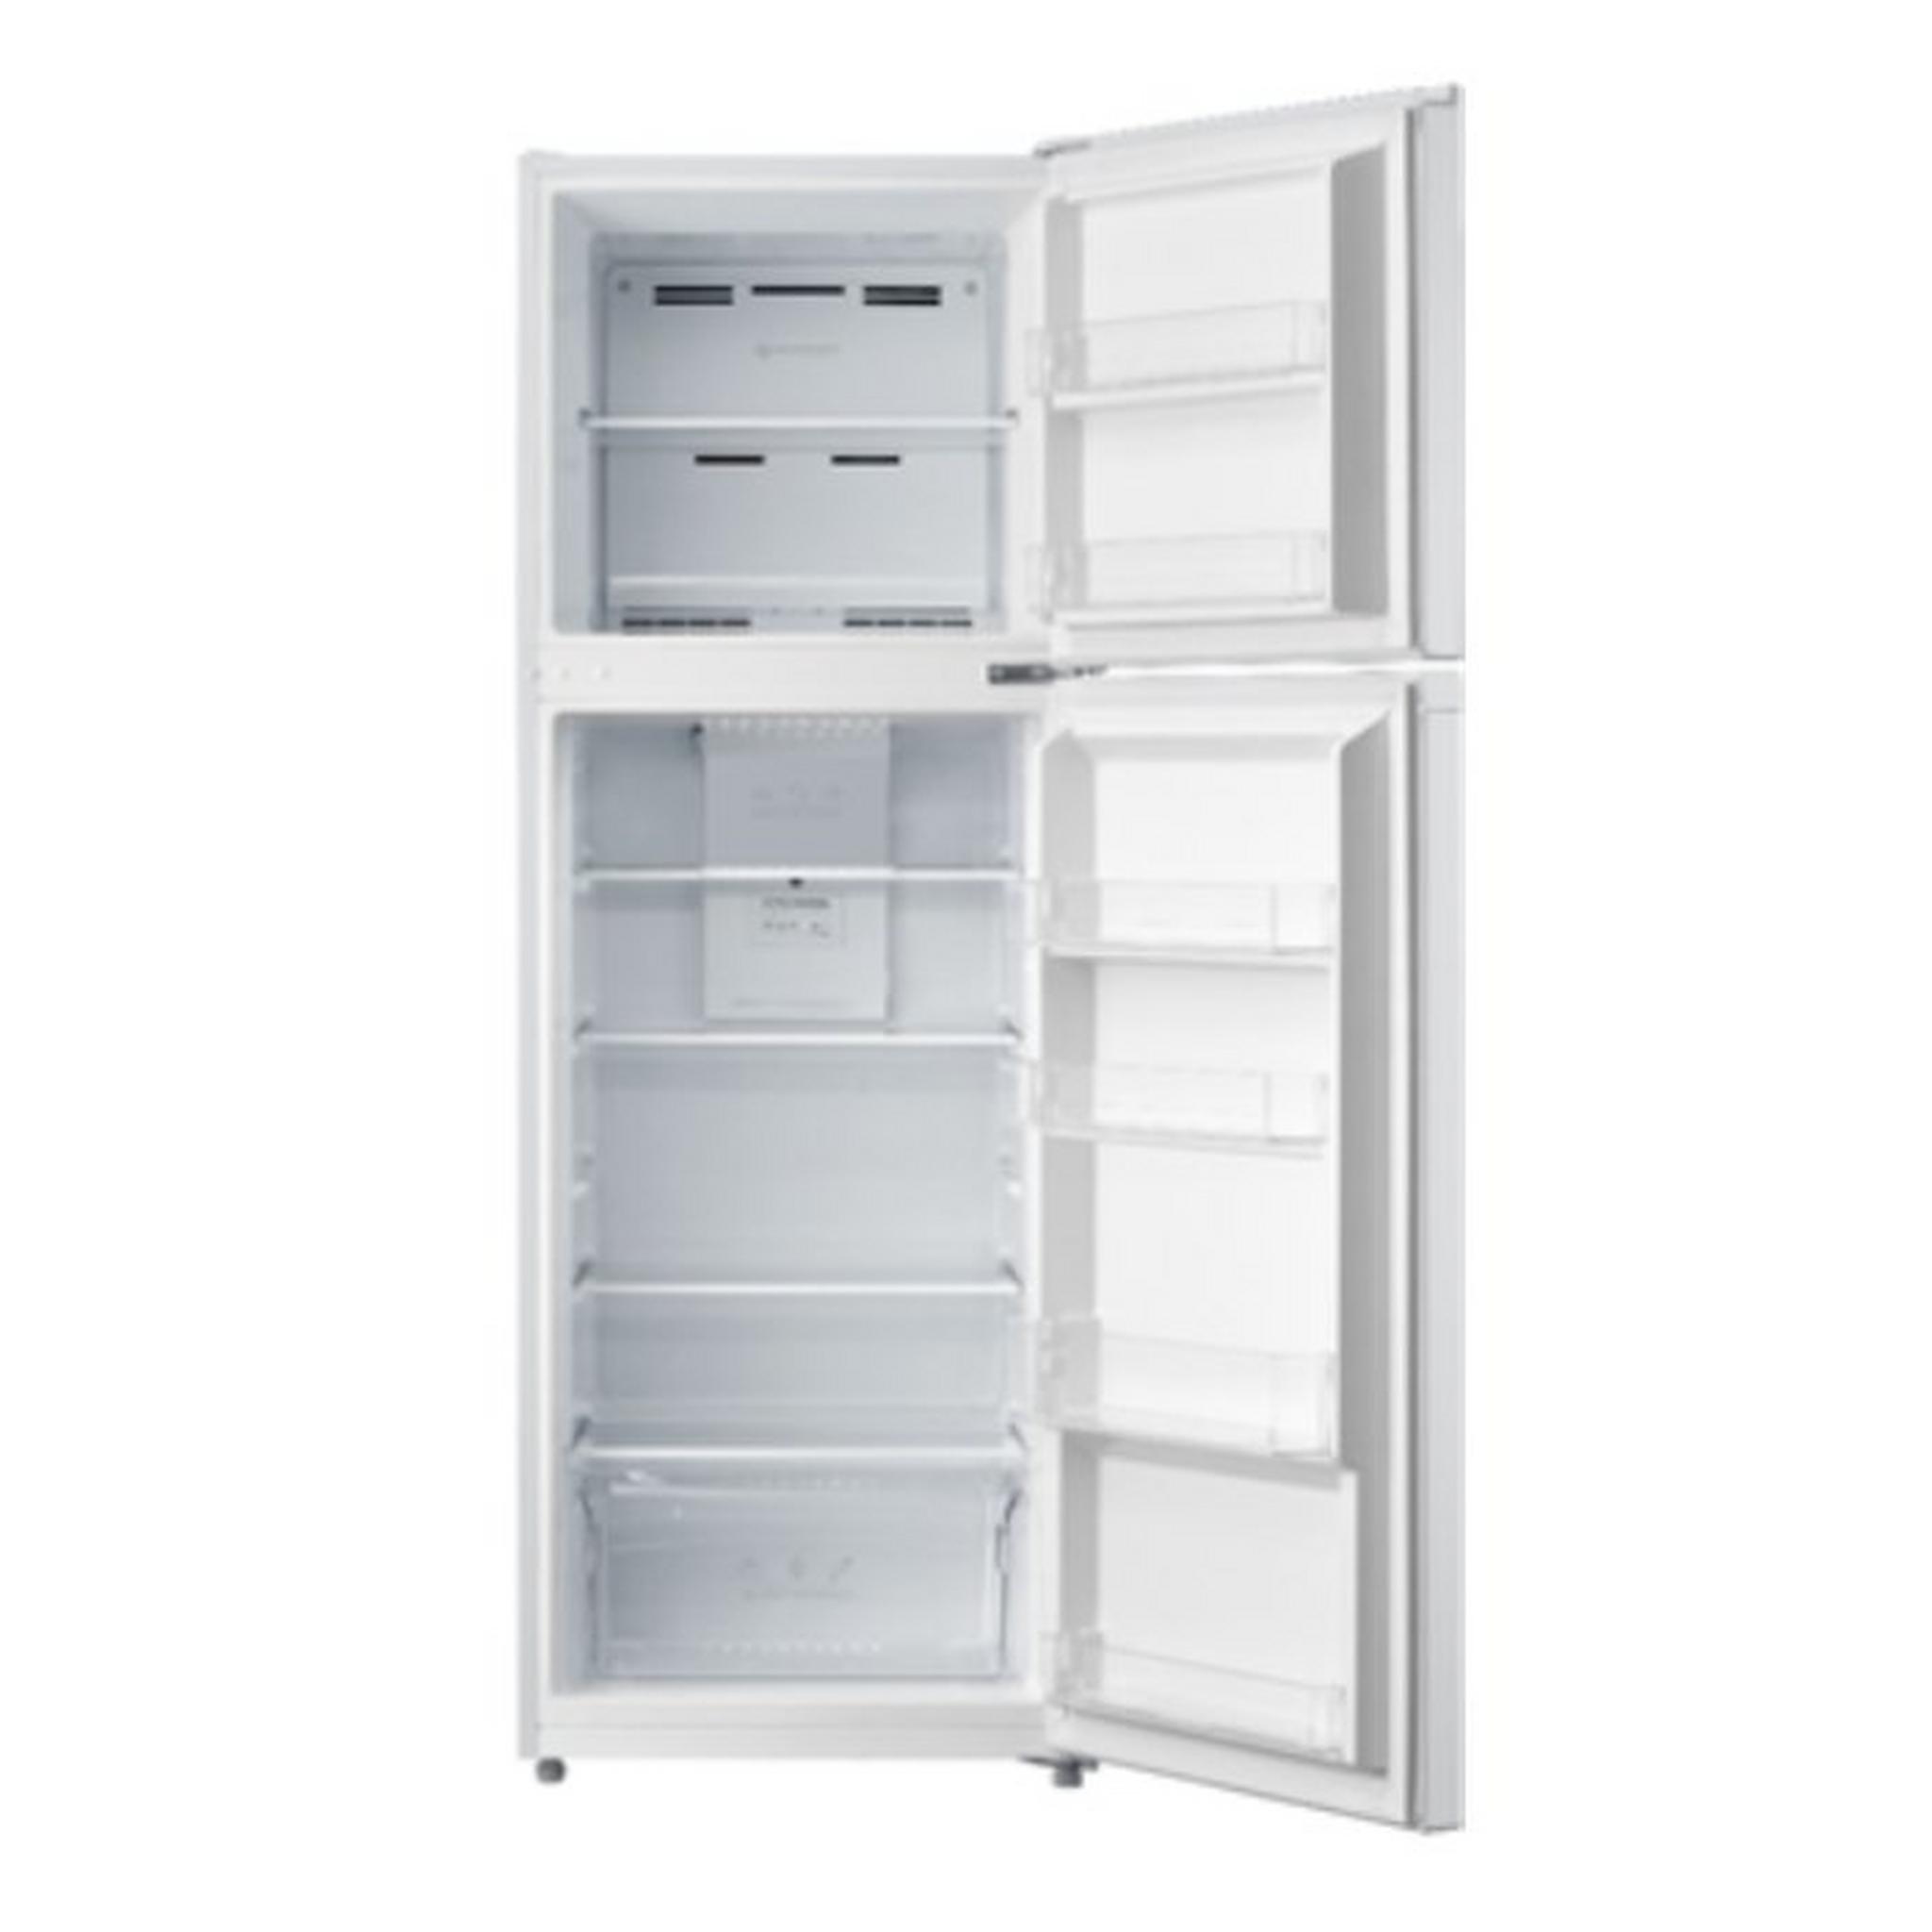 Wansa Top Mount Refrigerator, 12.8CFT, 364-Liters, WRTG-364-NFWTC62 - White